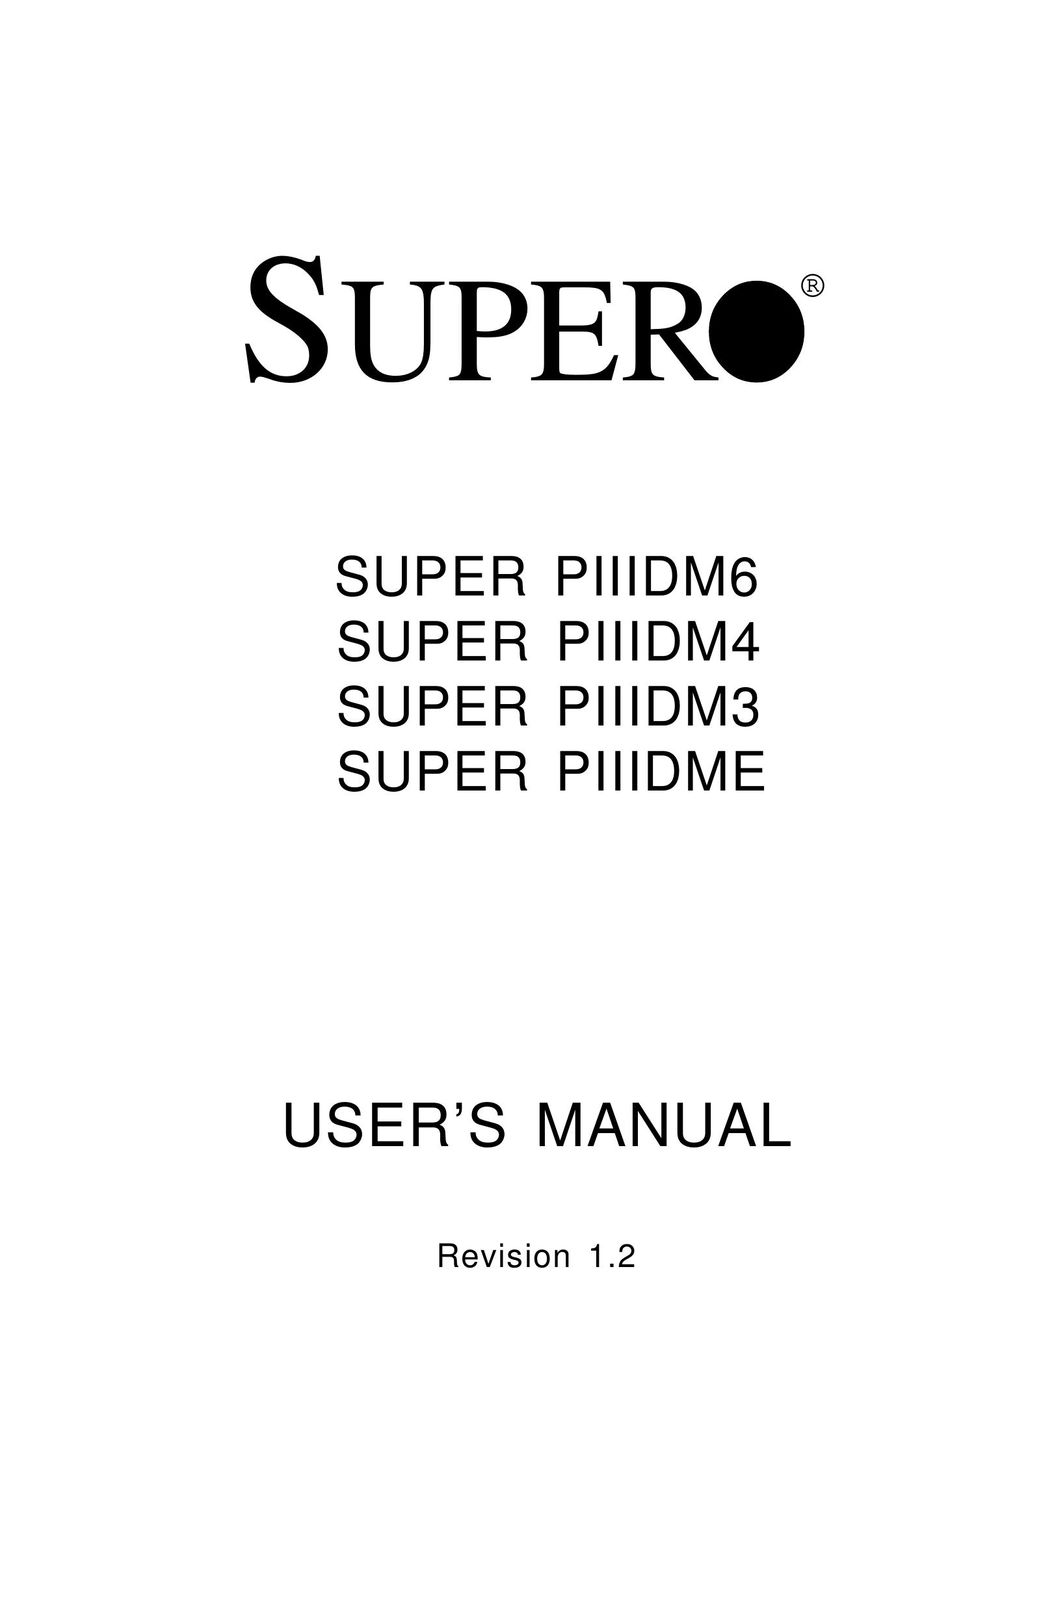 SUPER MICRO Computer Super PIIIDM4 Computer Hardware User Manual